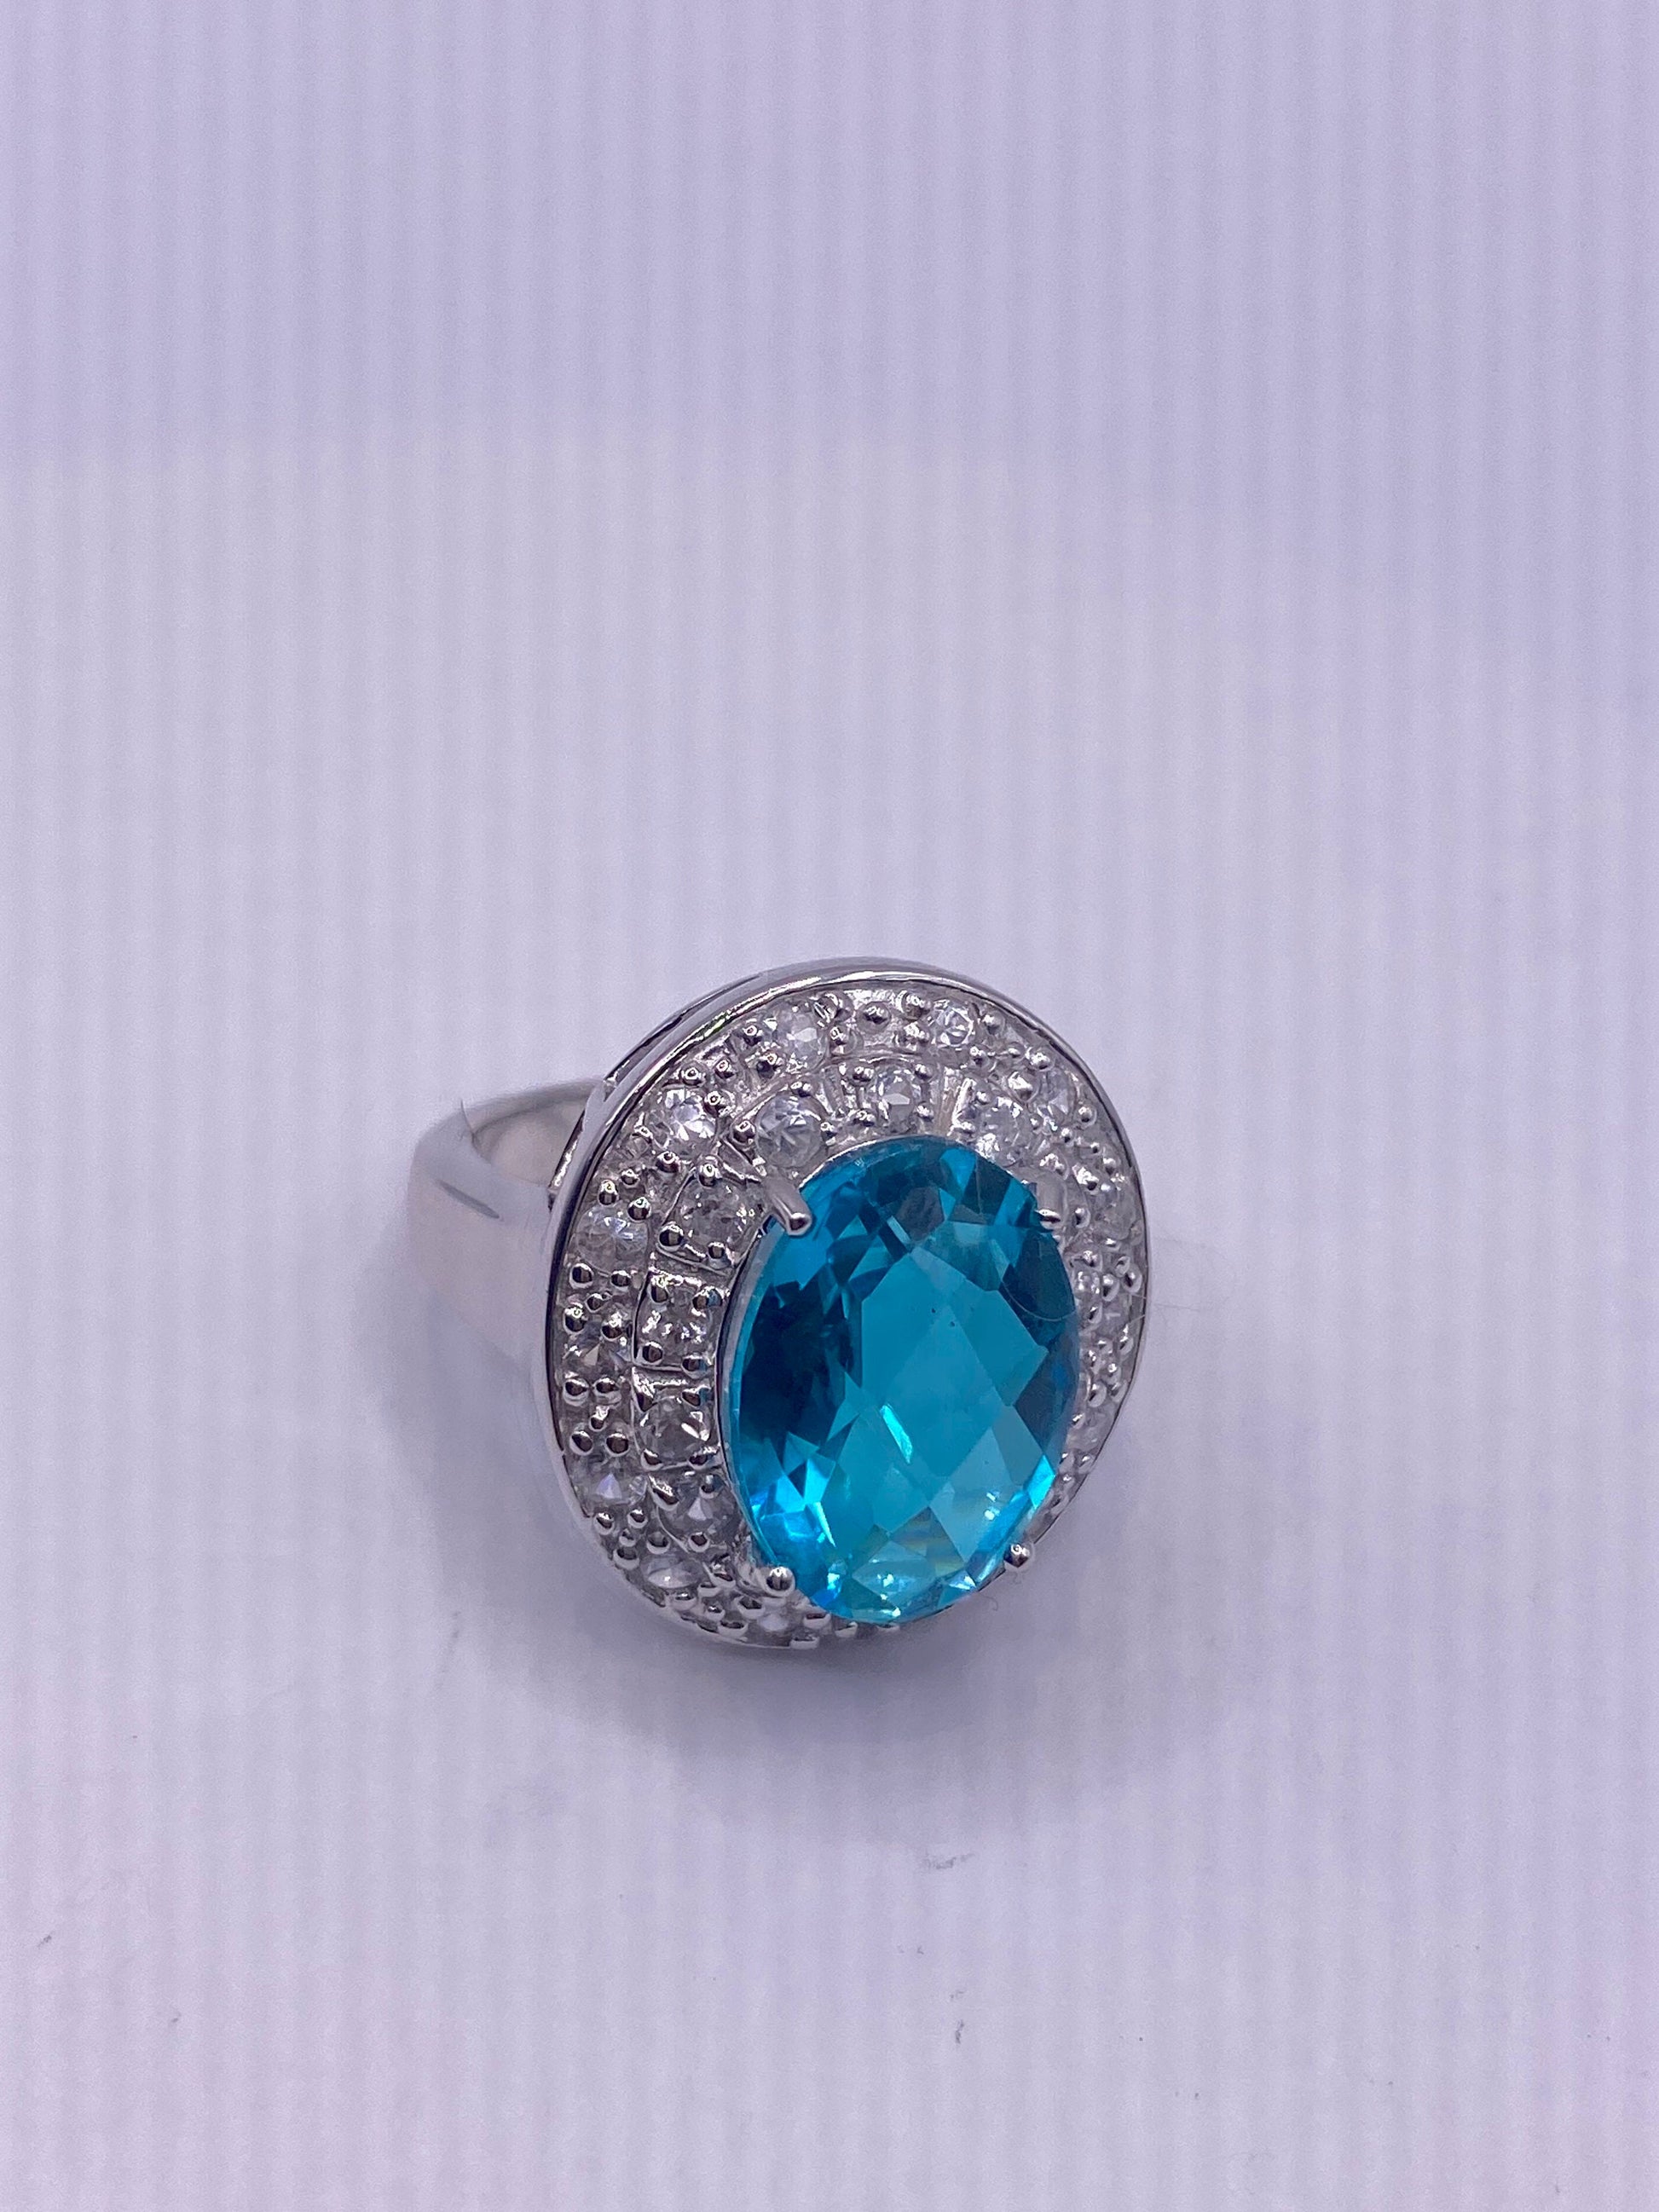 Vintage Blue Fluorite 925 Sterling Silver Cocktail Ring Size 5.75